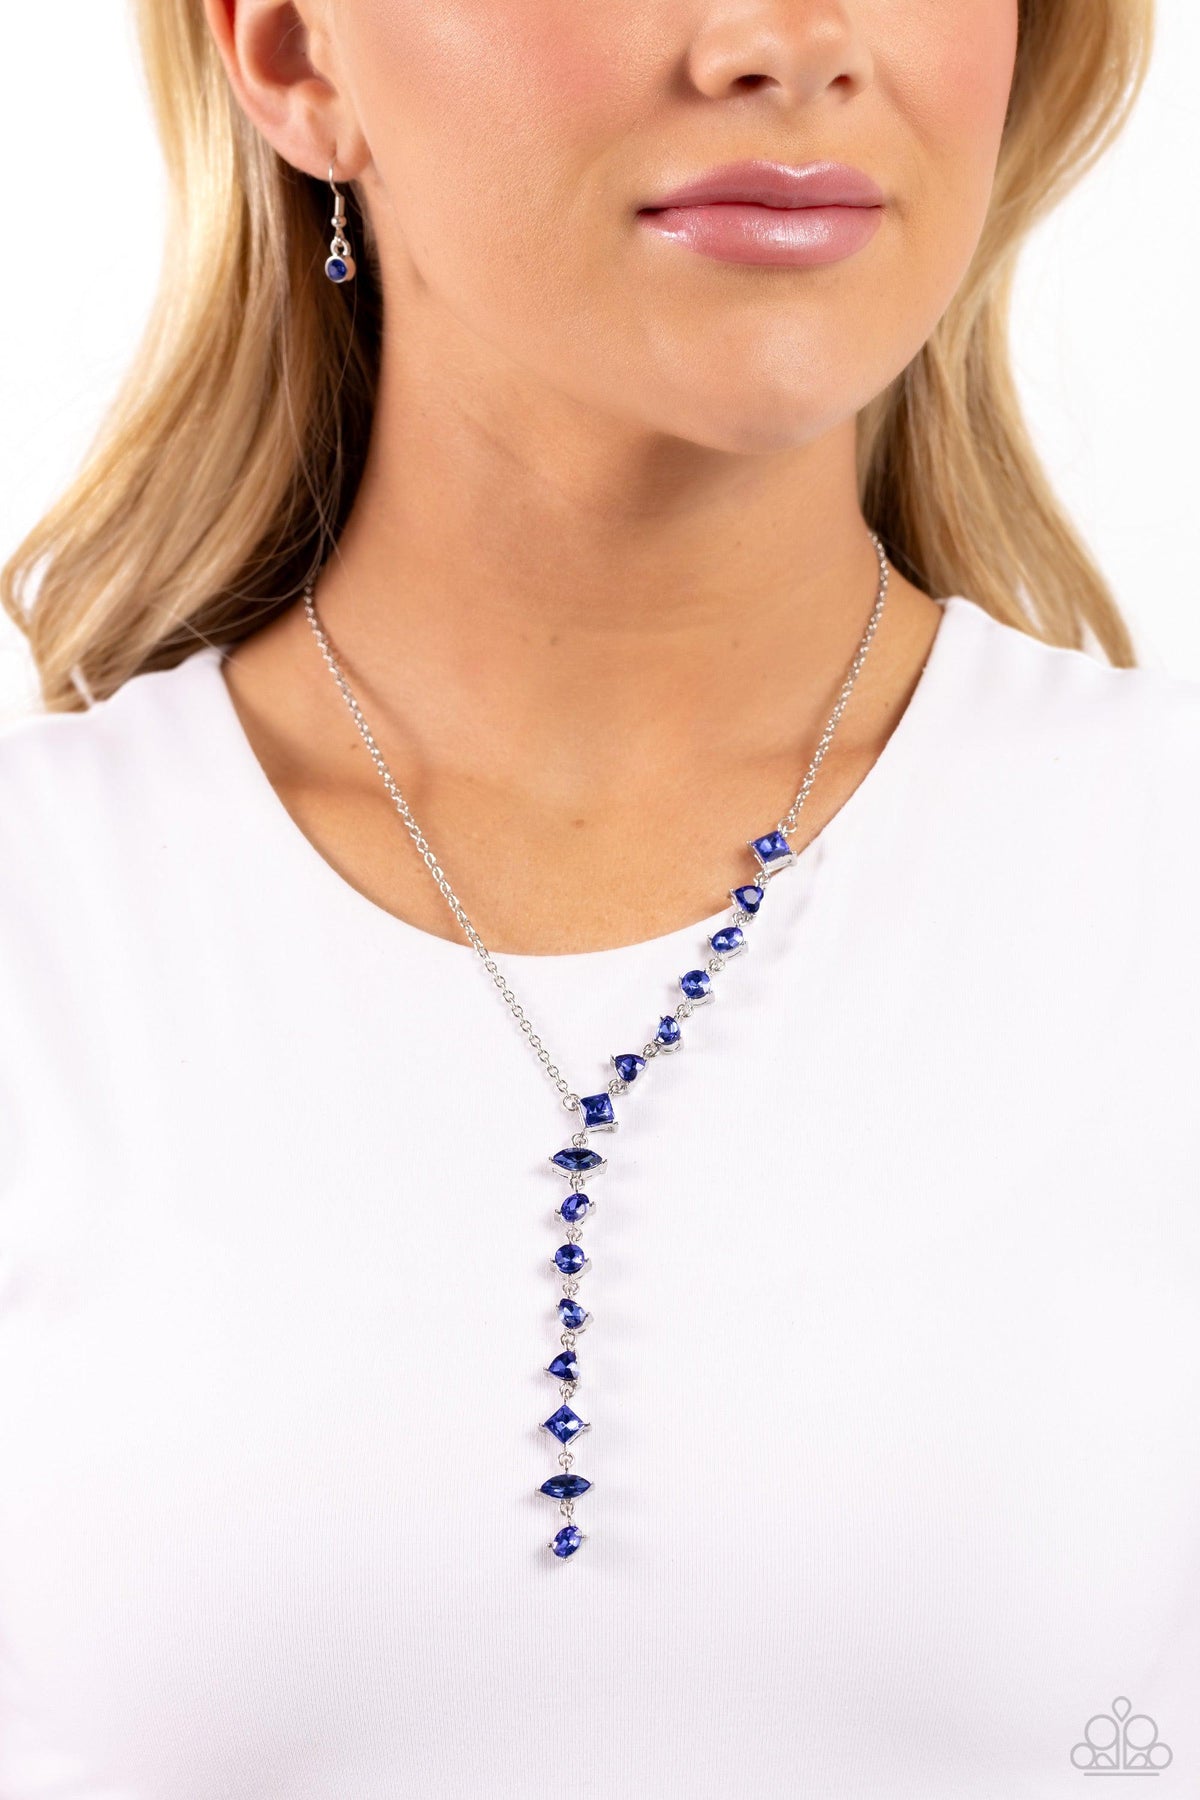 Diagonal Daydream Blue Rhinestone Necklace - Paparazzi Accessories-on model - CarasShop.com - $5 Jewelry by Cara Jewels